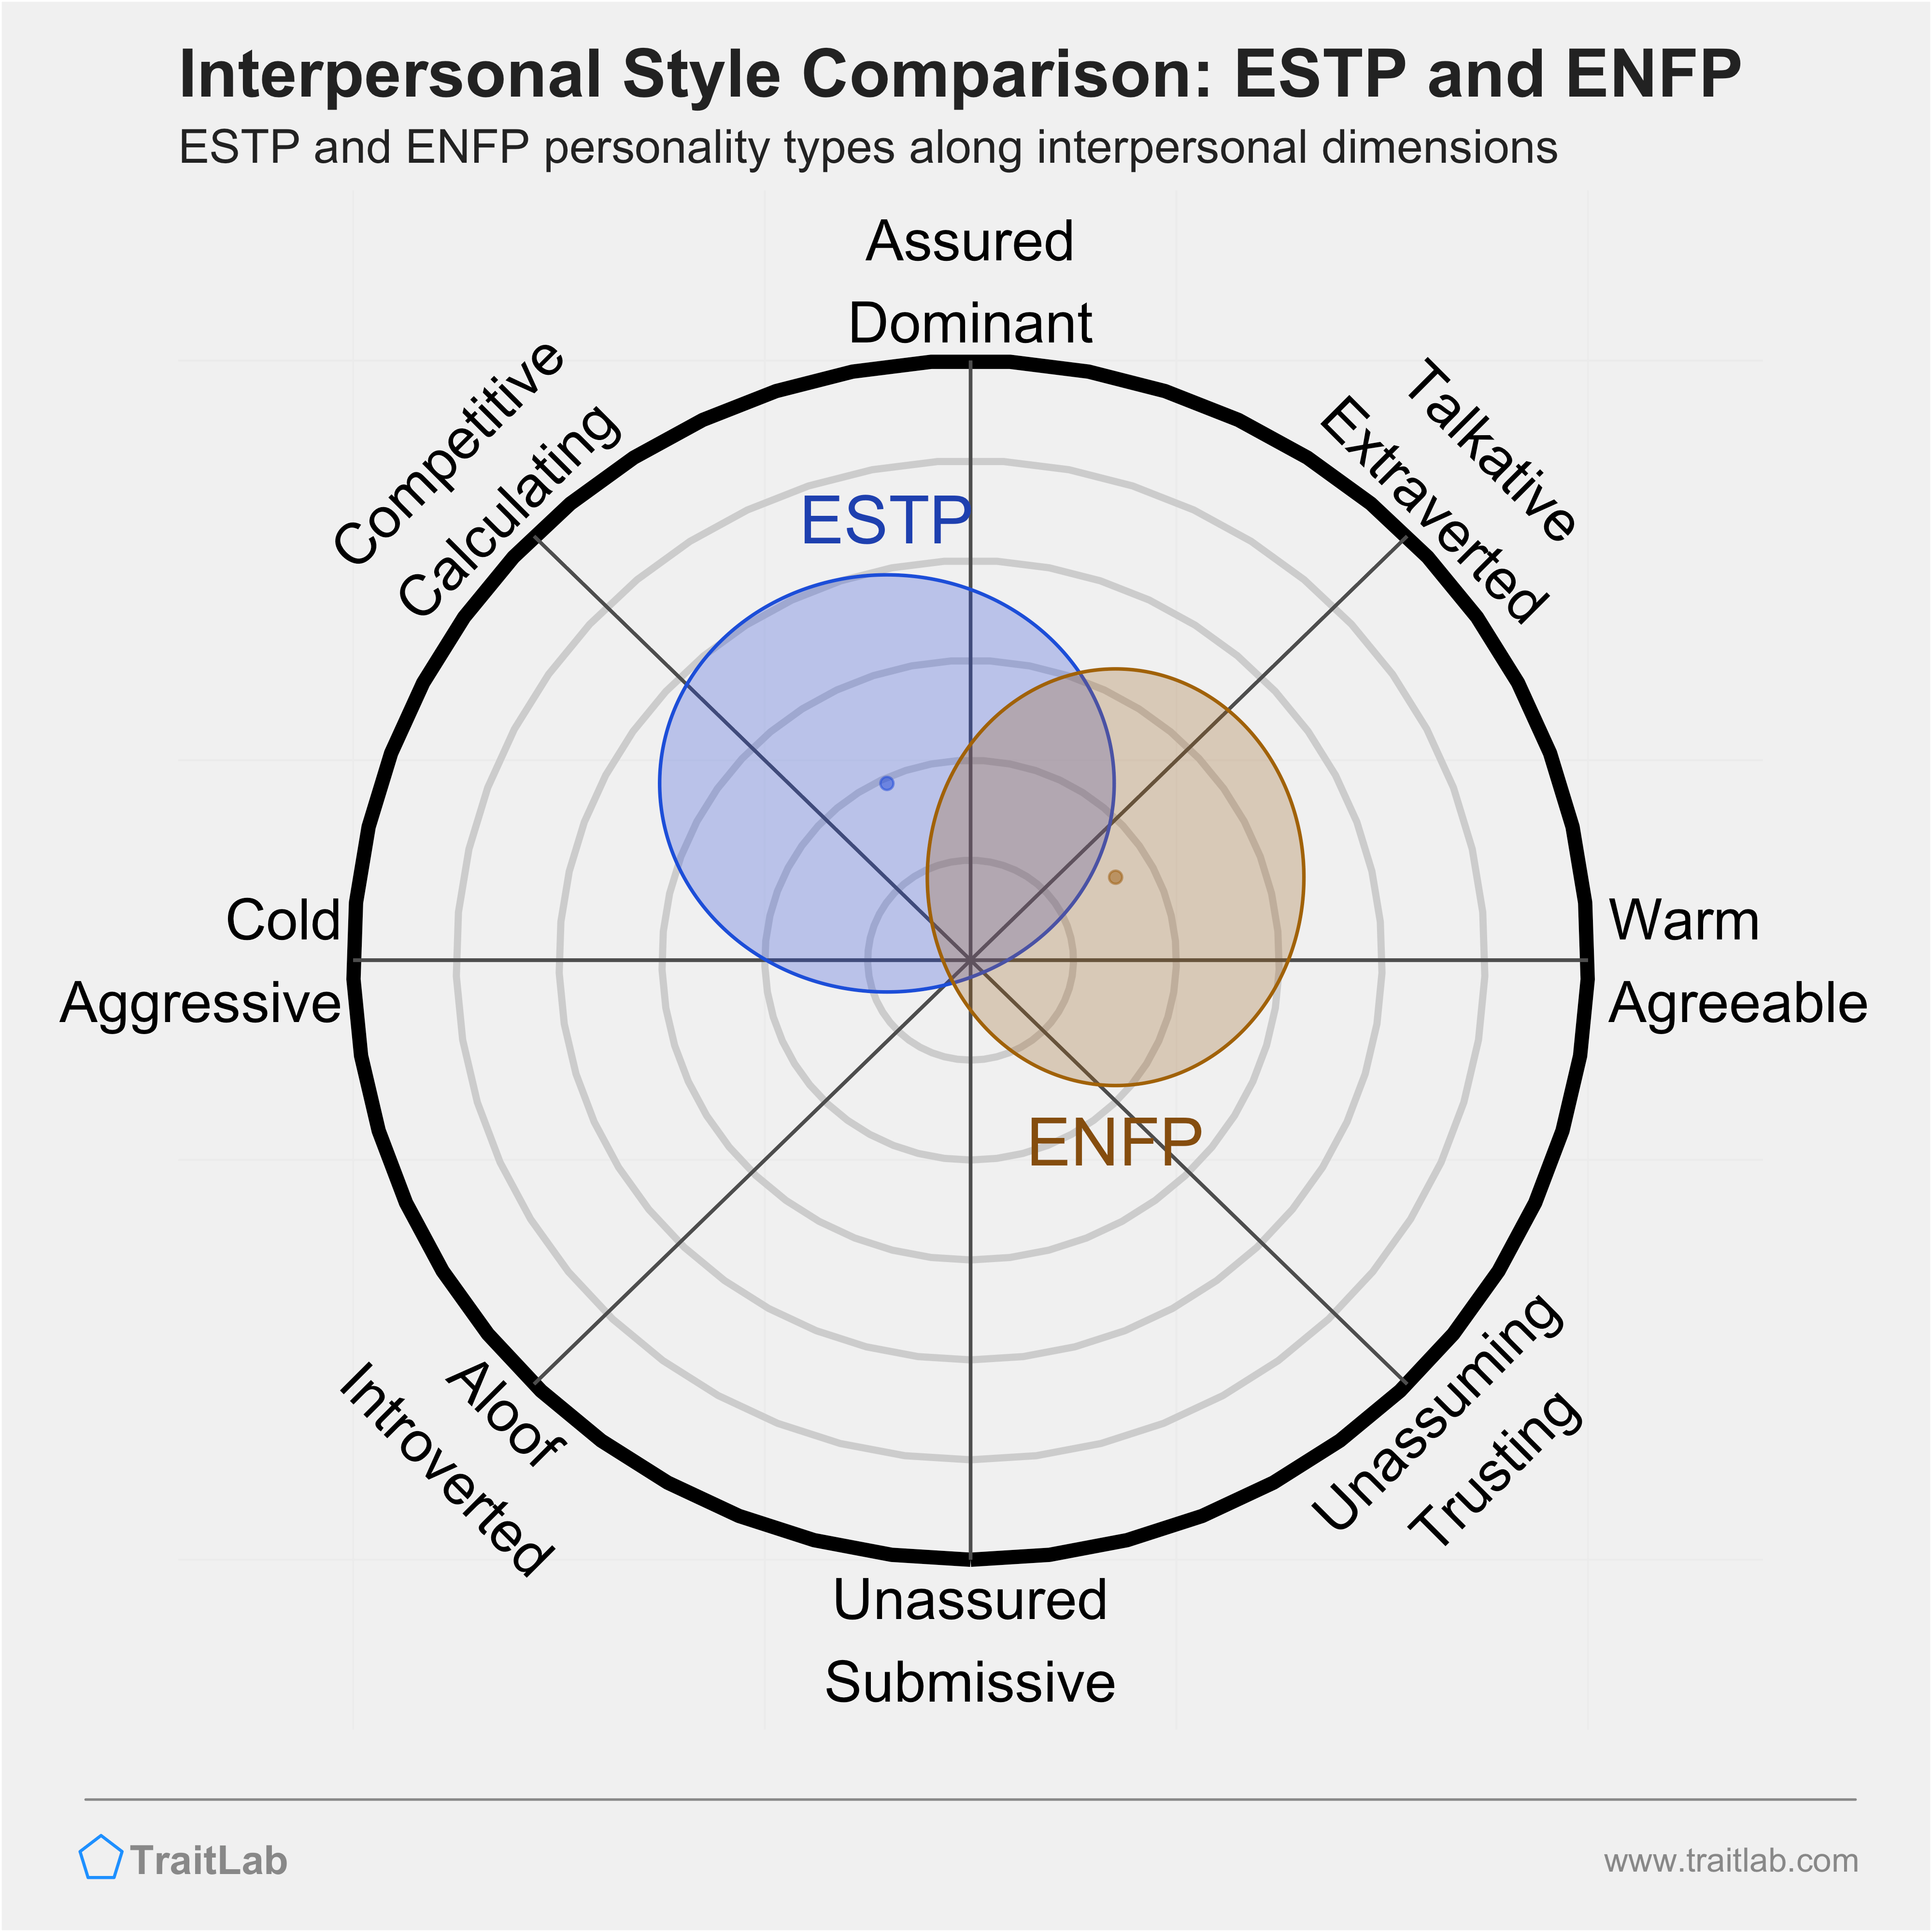 ESTP and ENFP comparison across interpersonal dimensions